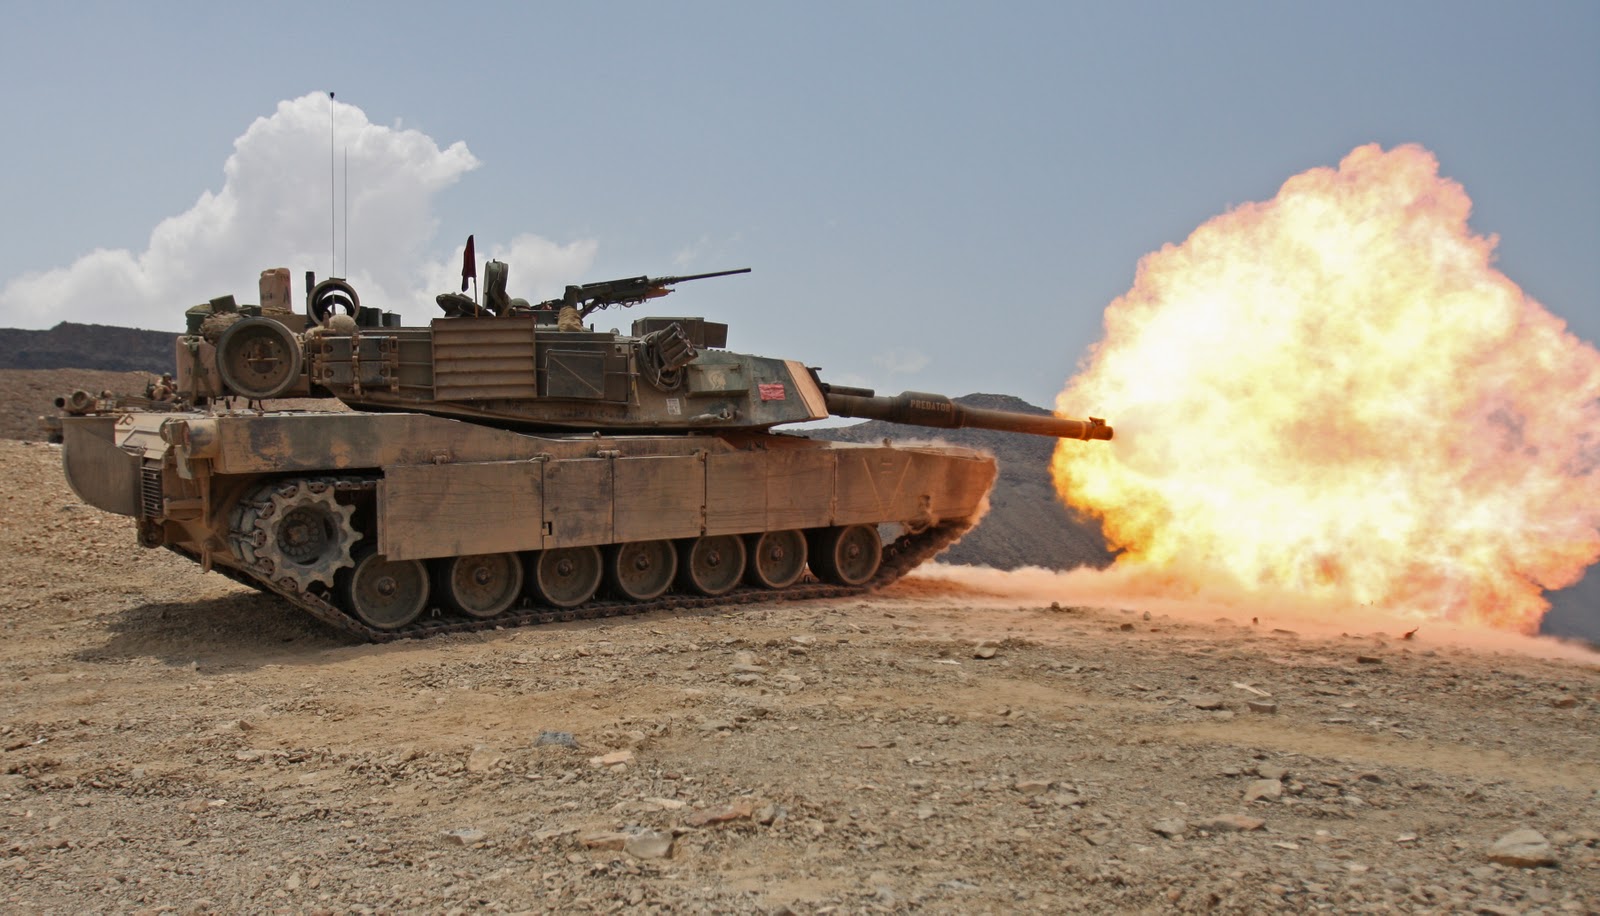 M1 Abrams Picture by Alex C. Sauceda